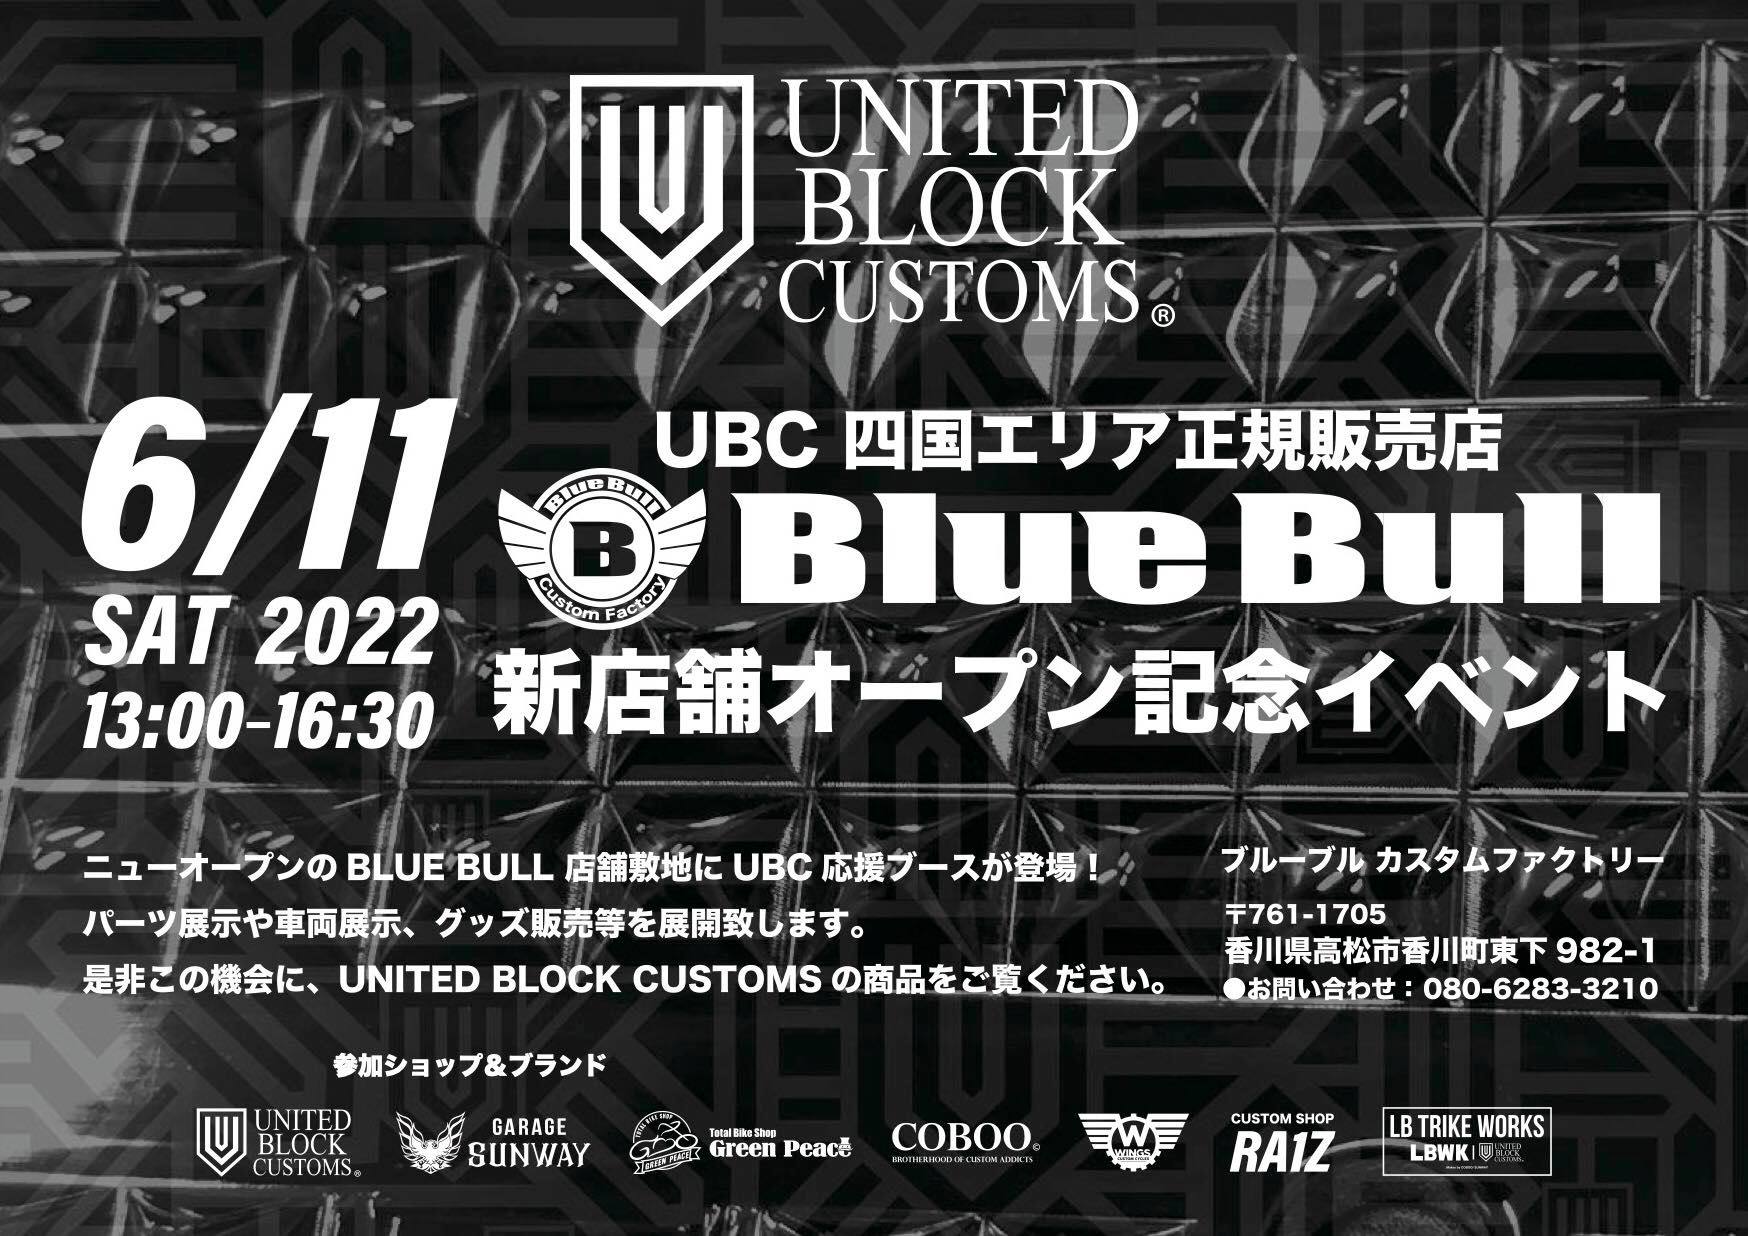 6/11 Sat 2022 13:00-16:30 UBC四国エリア正規販売店 BLUE BULL 新店舗オープン記念イベントを開催します。